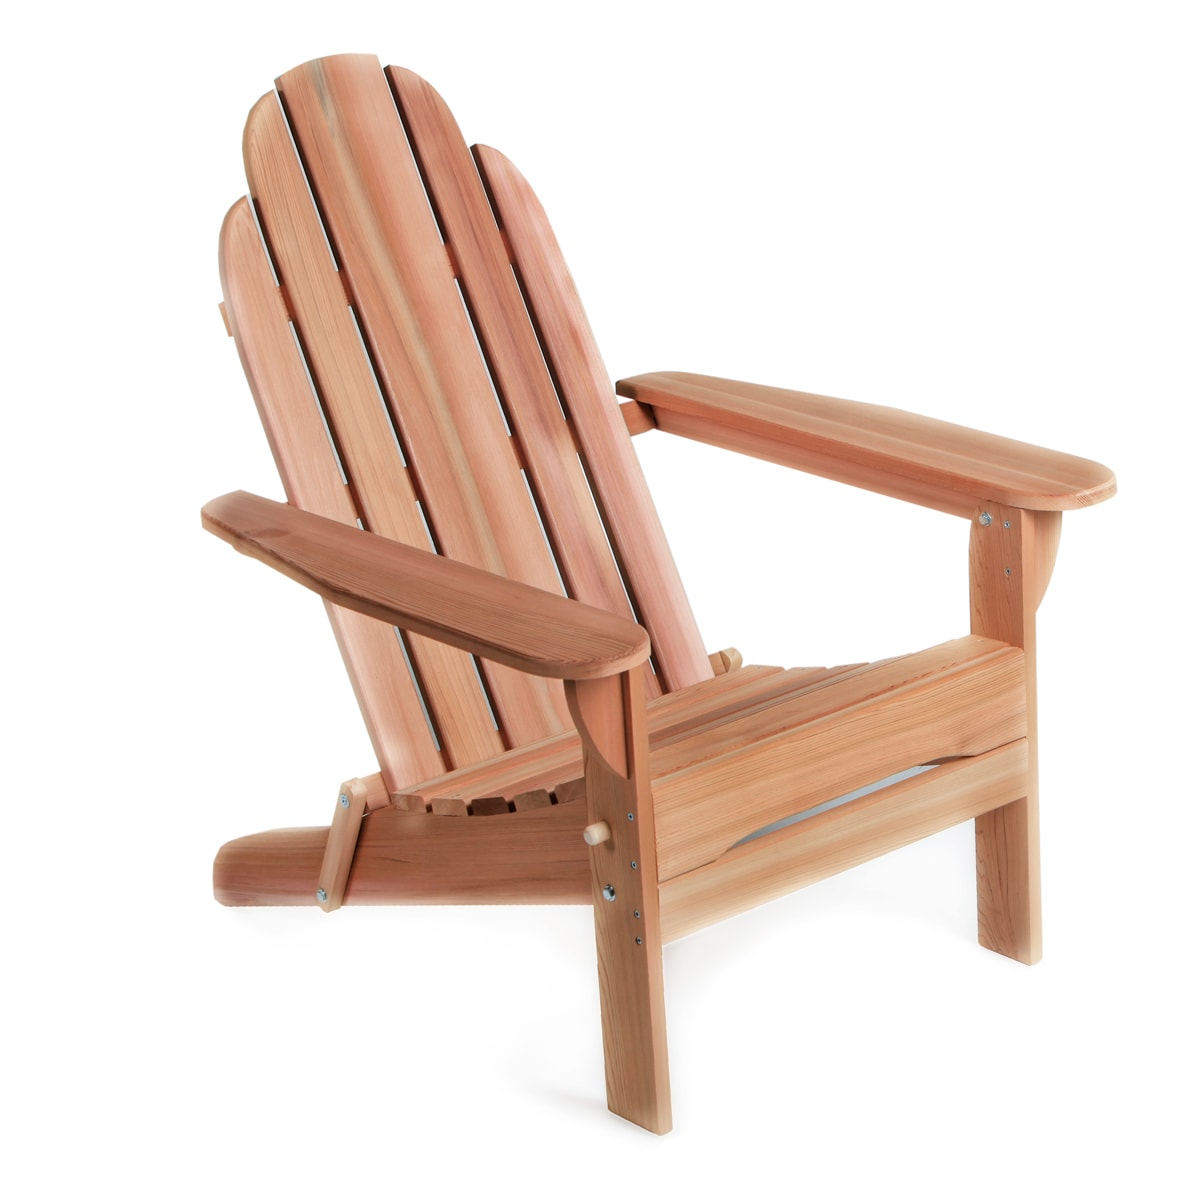 ALL THINGS CEDAR Folding Chair Teak Table Patio Outdoor Furniture